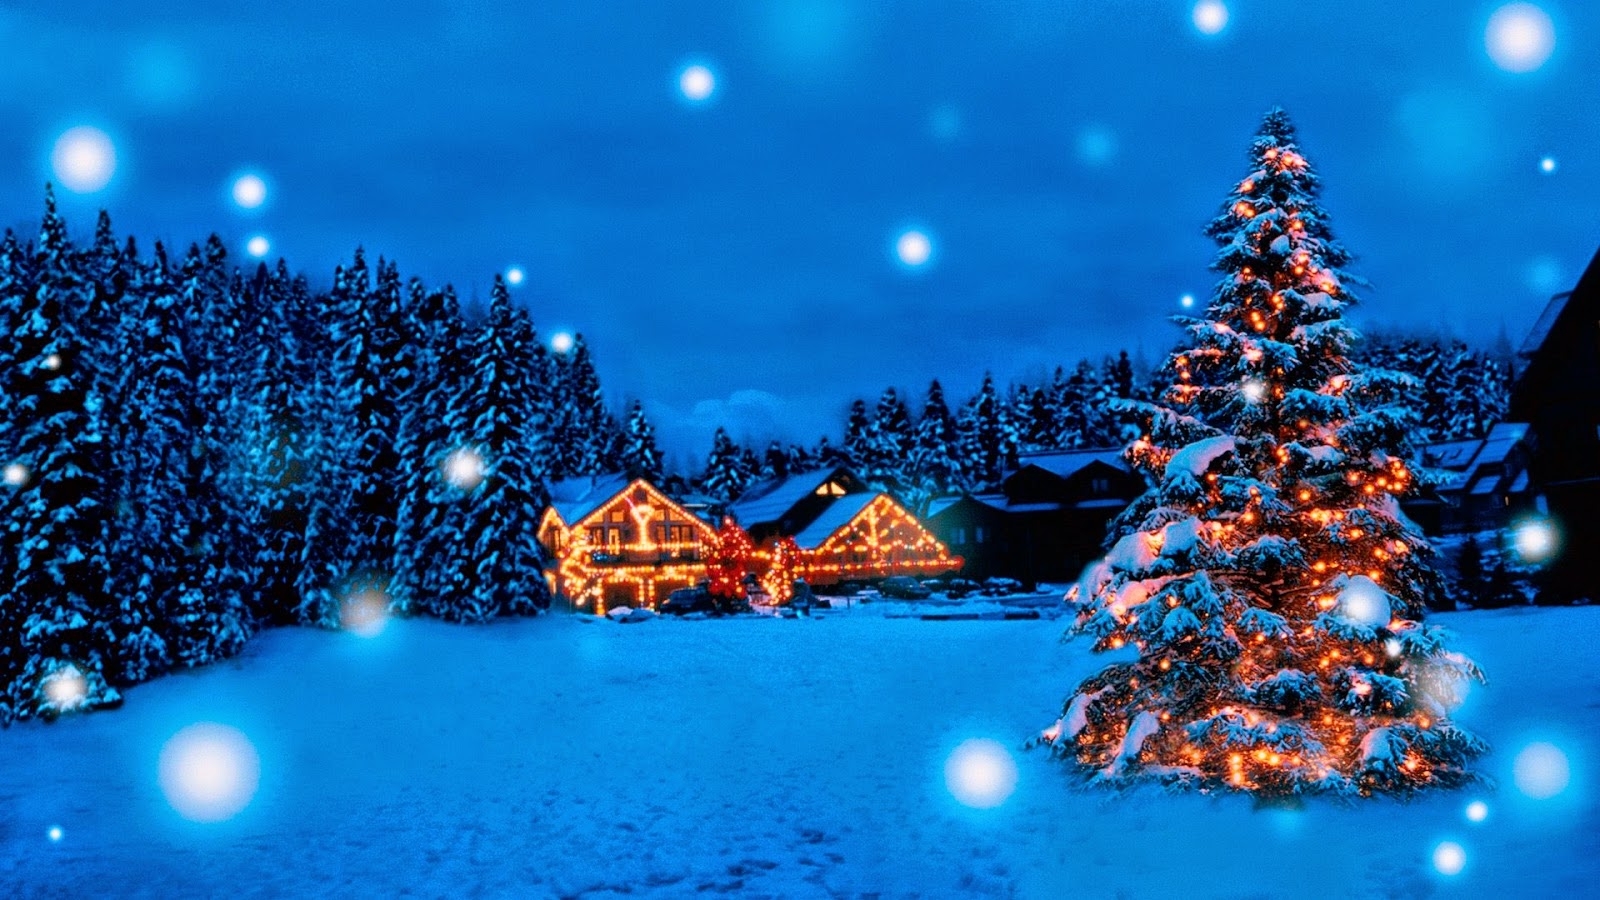 Free download Christmas Tree Winter HD Wallpaper 1600x900 px [1600x900 ...